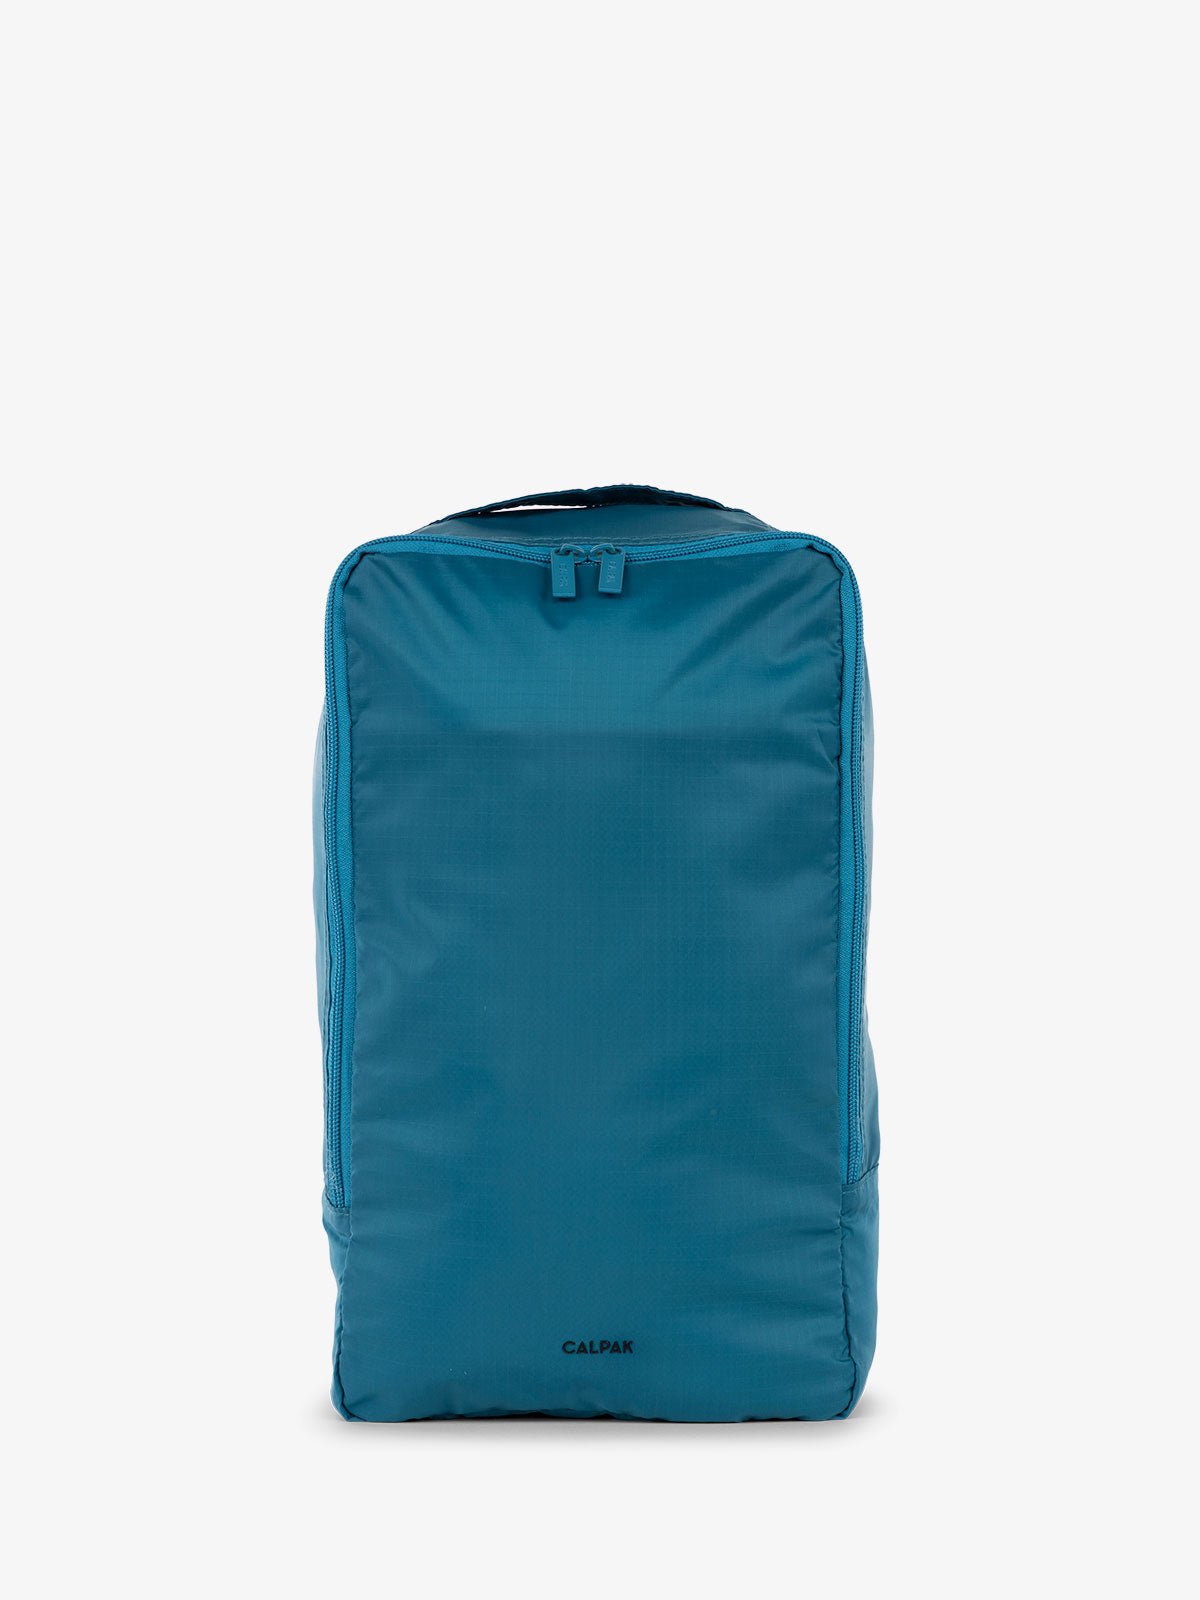 CALPAK Compakt shoe storage travel bag with handle in lagoon